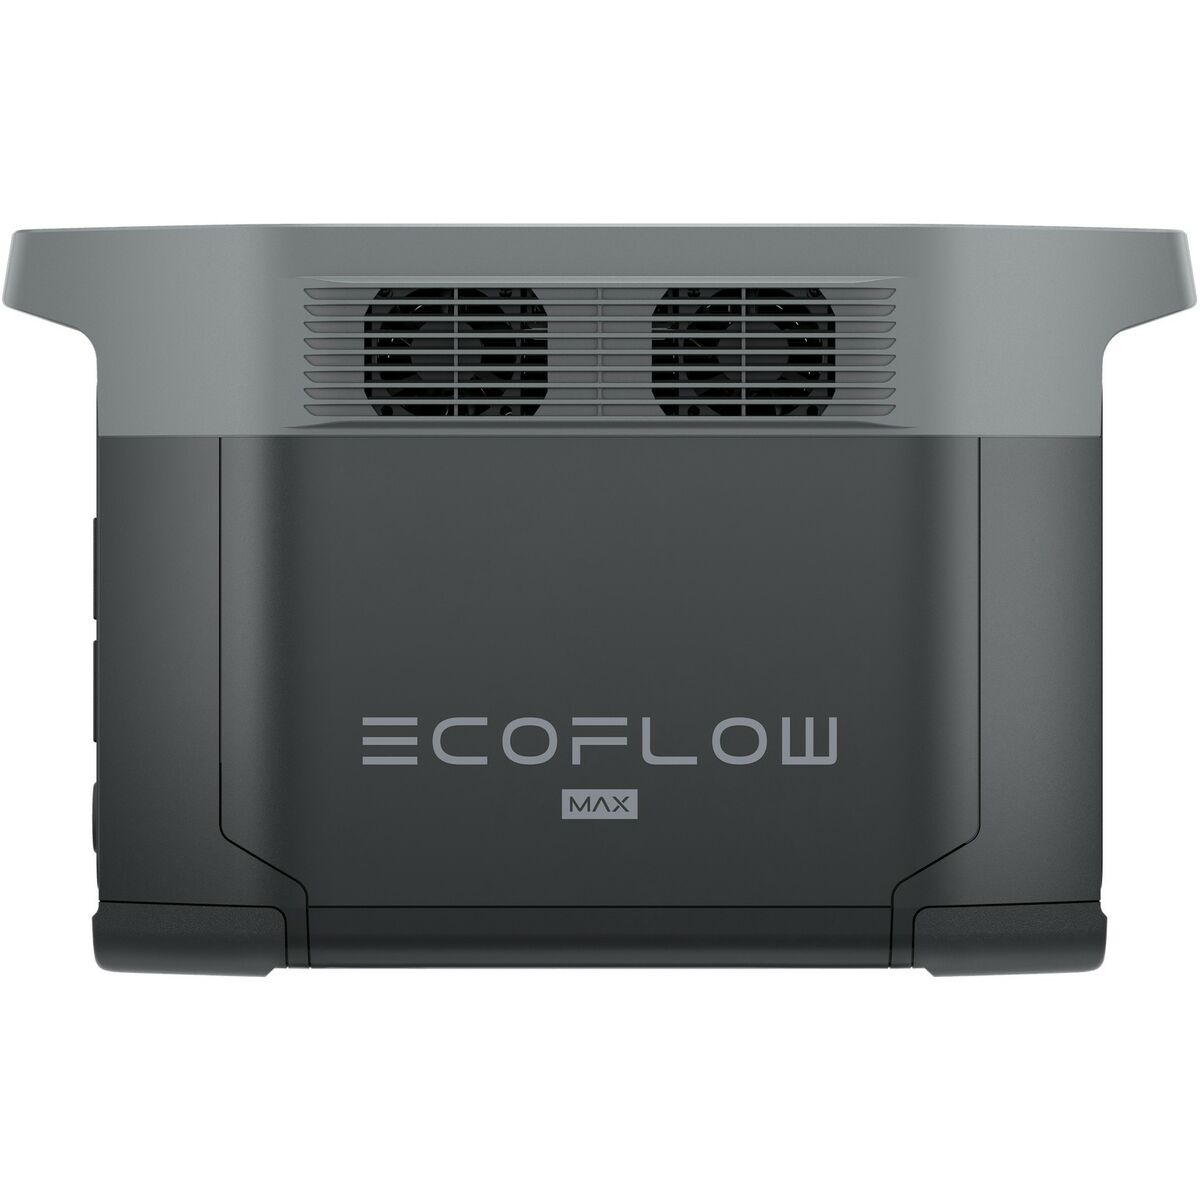 Laptop Charger Ecoflow 2400 W